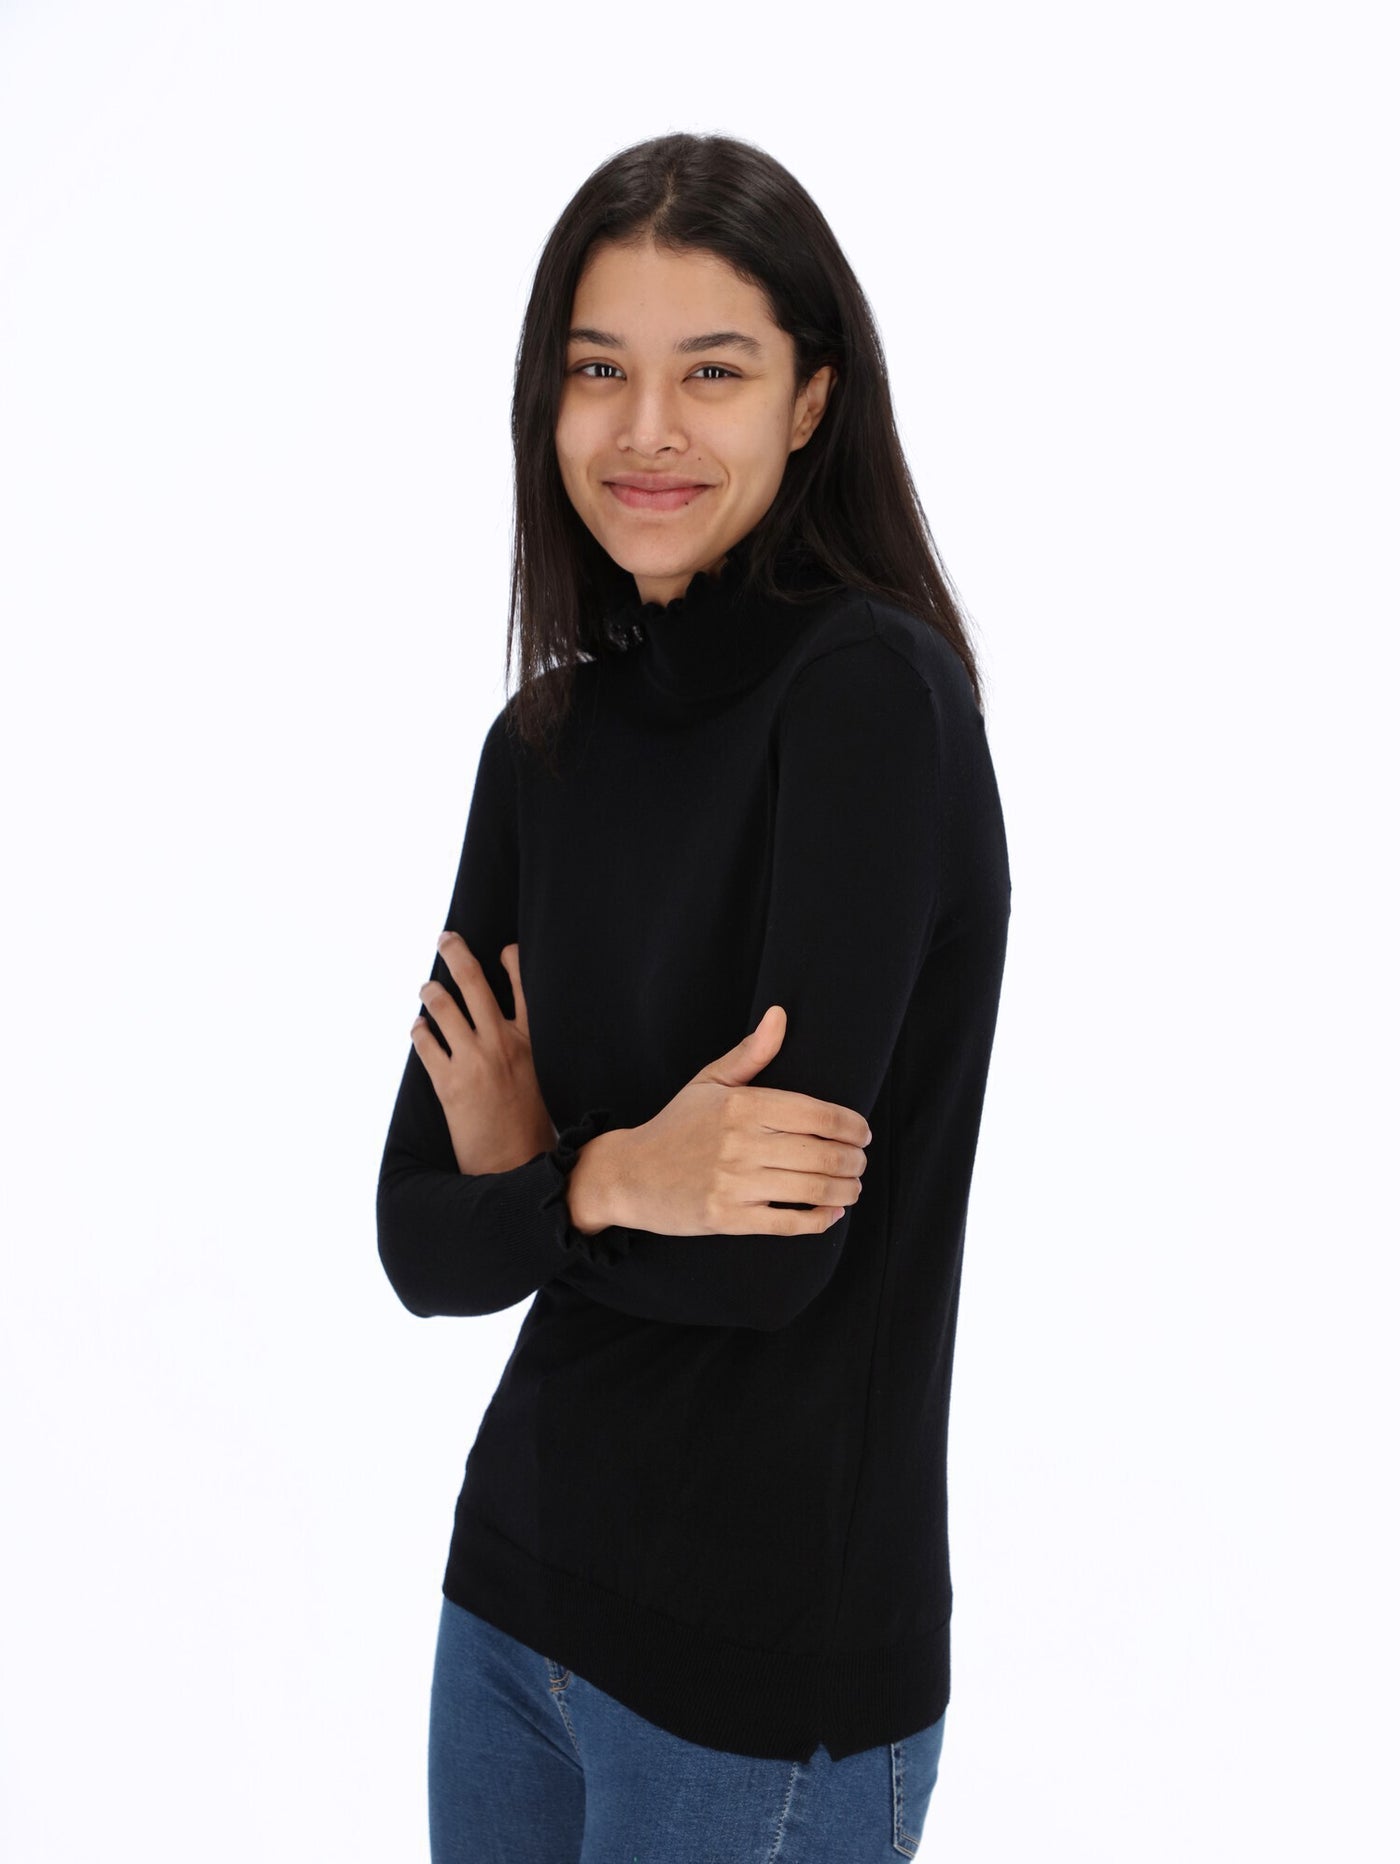 Ruffle High Collar Sweater